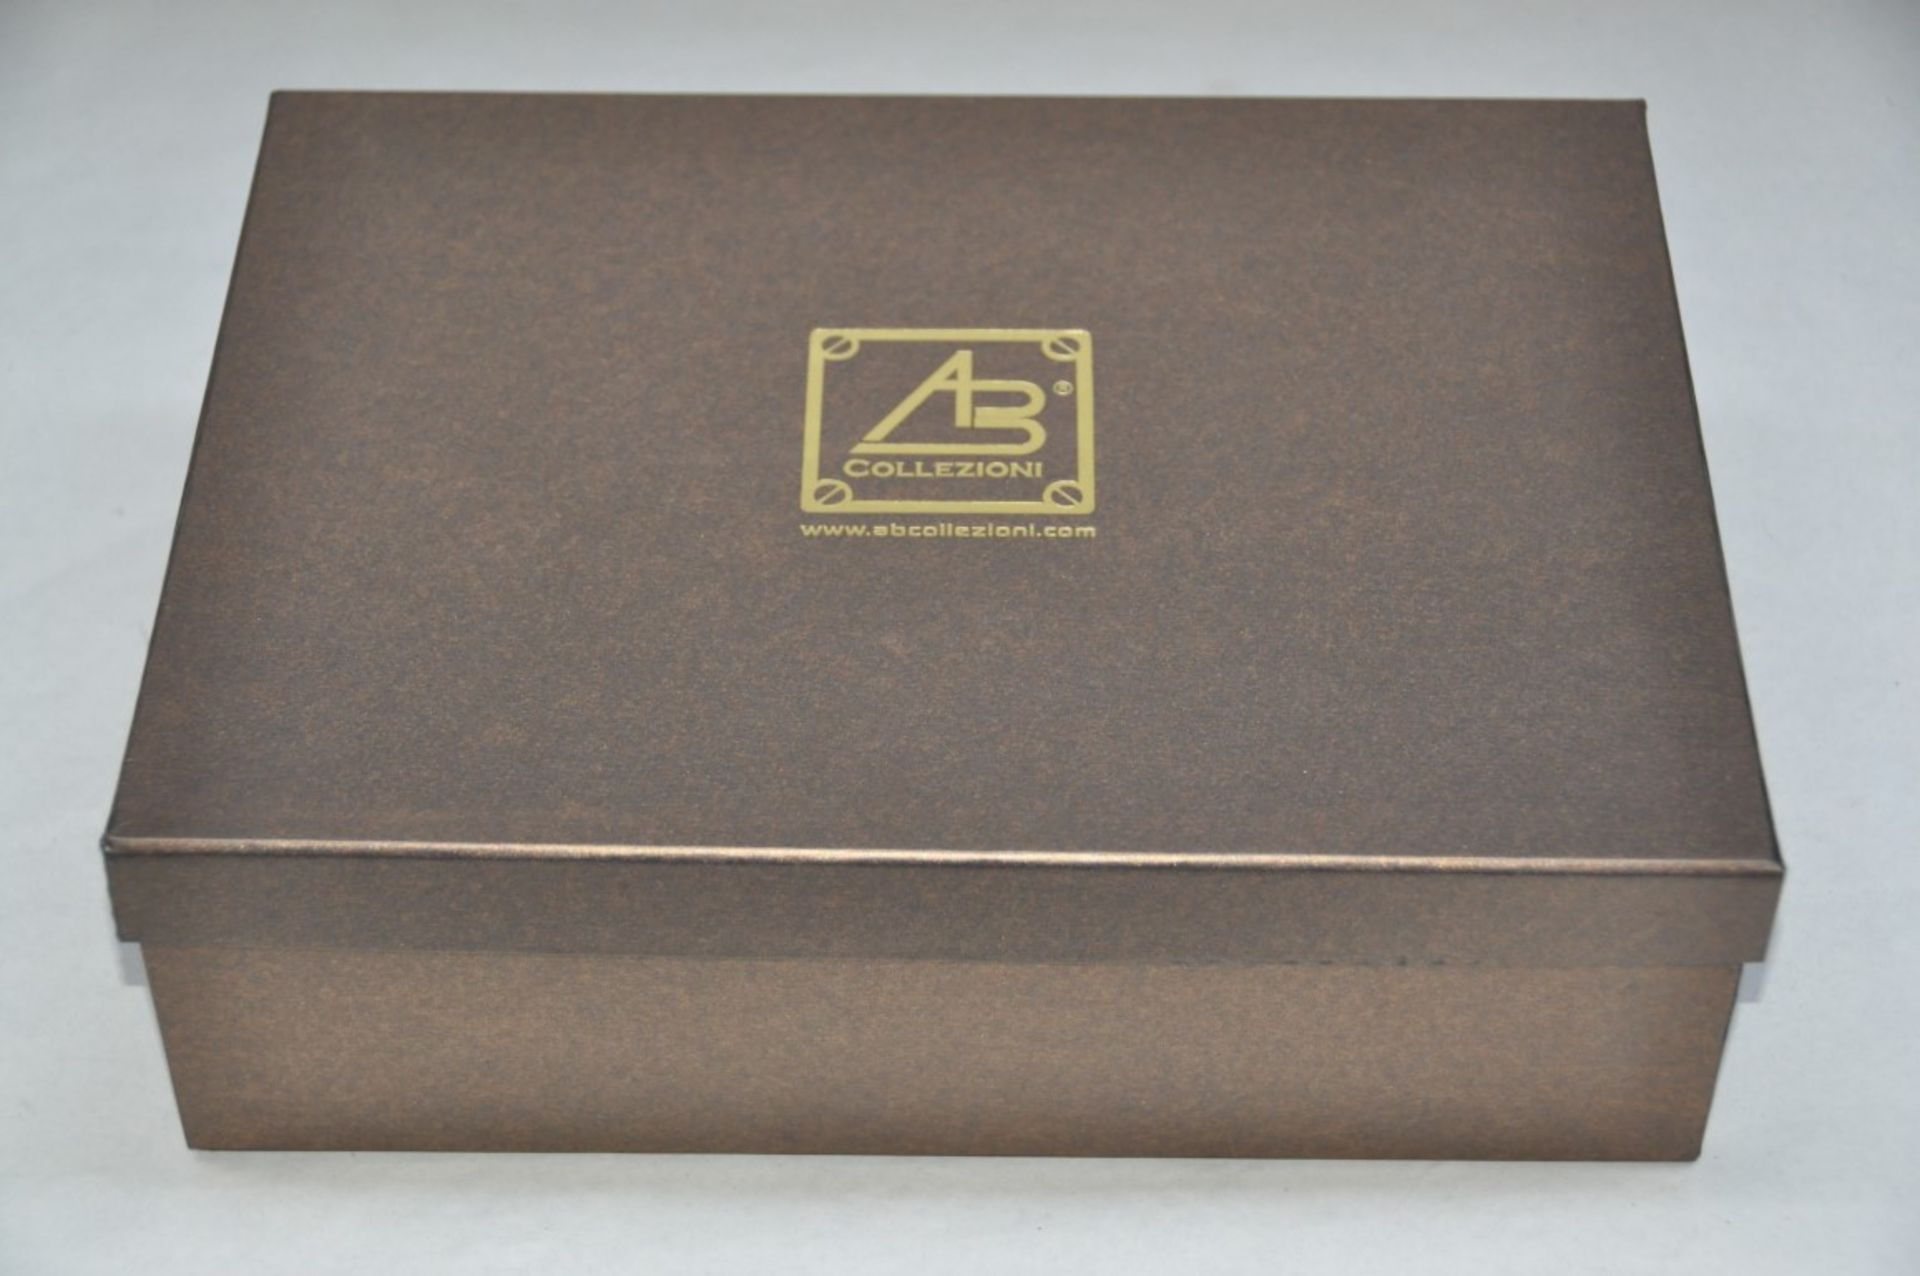 1 x "AB Collezioni" Italian Genuine Leather-Bound Luxury POKER SET (34048) - Ref LT004 - Features - Image 2 of 8